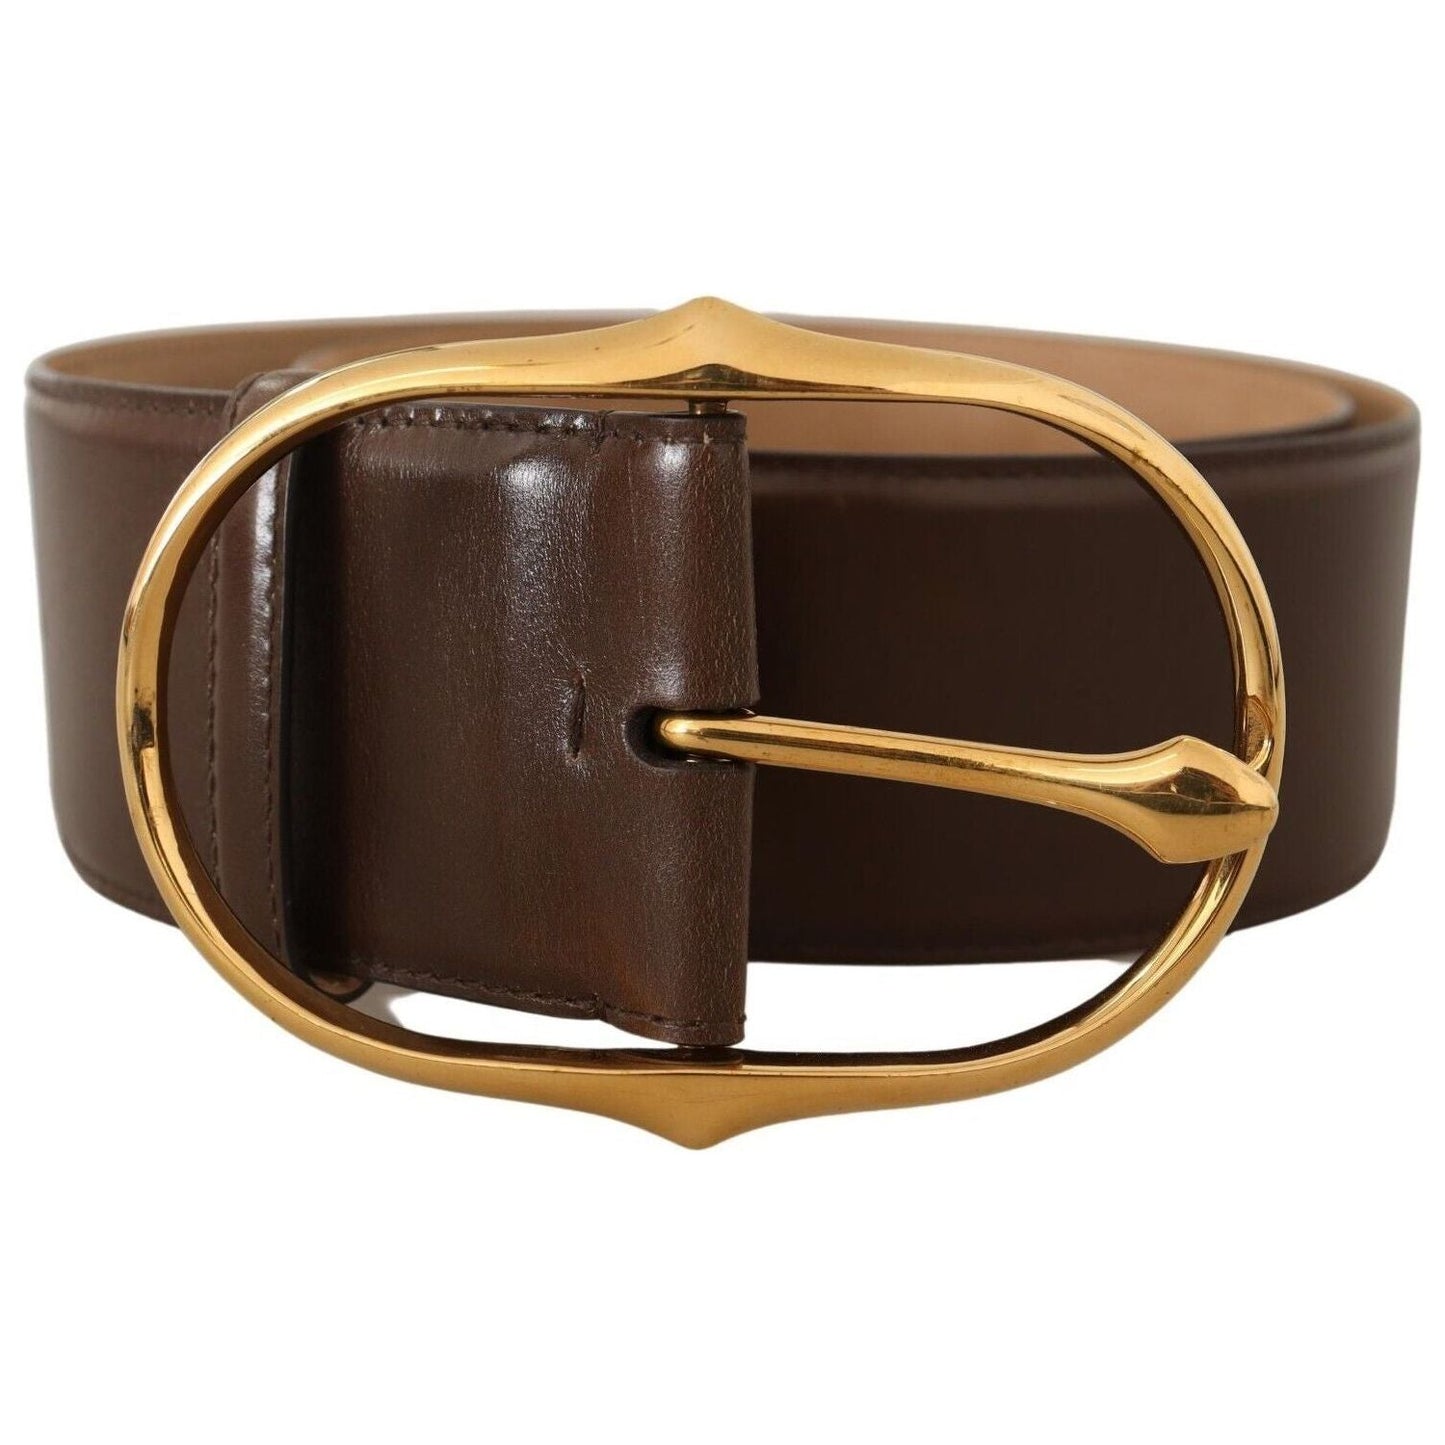 Dolce & Gabbana Elegant Brown Leather Belt with Gold Buckle brown-leather-gold-metal-oval-buckle-belt-7